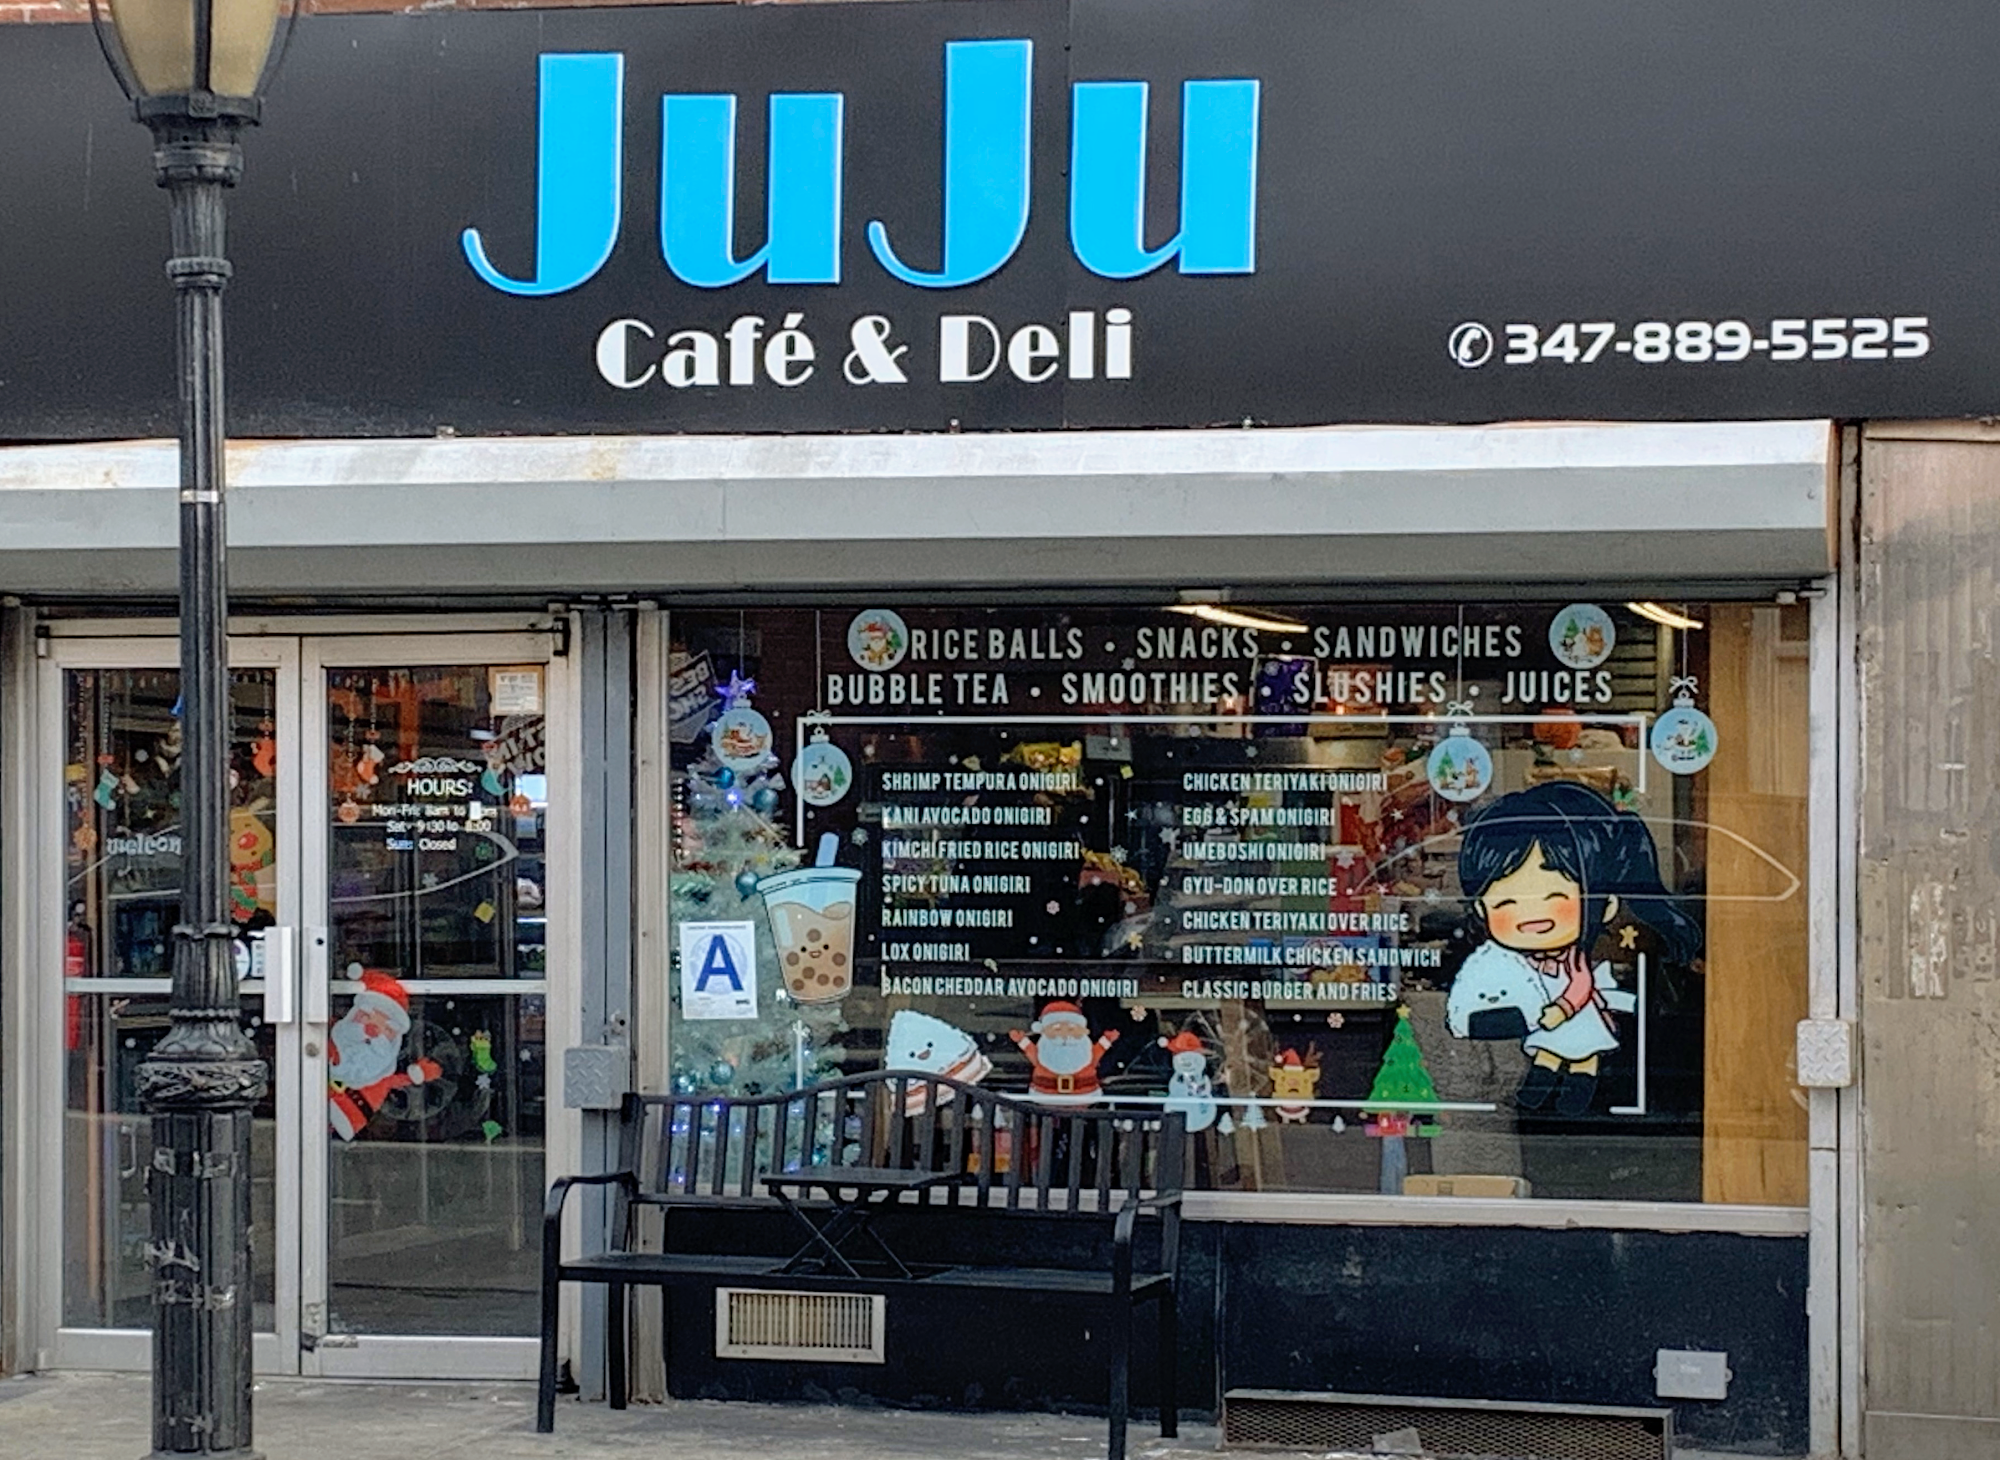 Juju Cafe and Deli